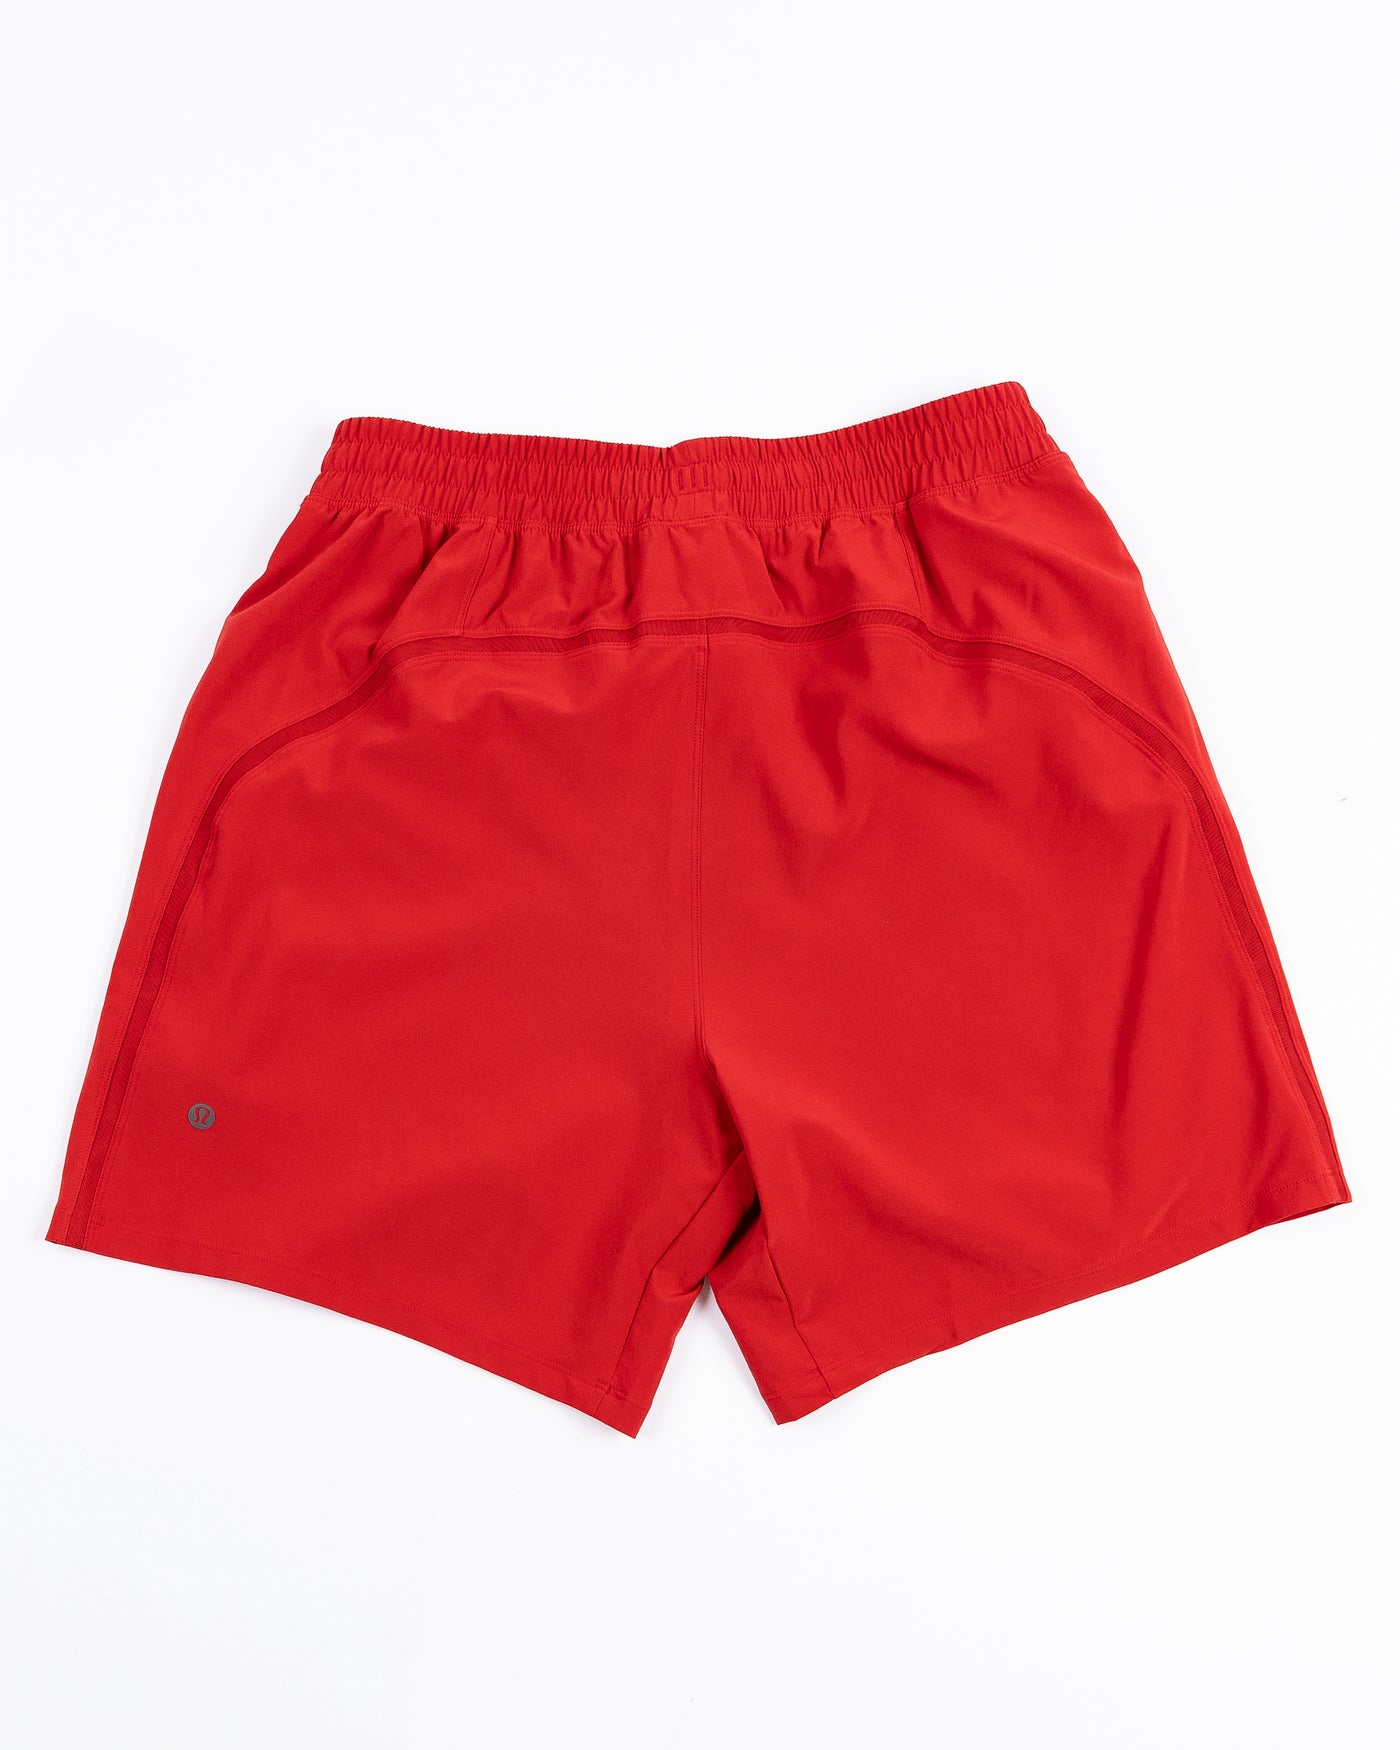 red lululemon men's shorts with Chicago Blackhawks wordmark printed on left leg - back lay flat